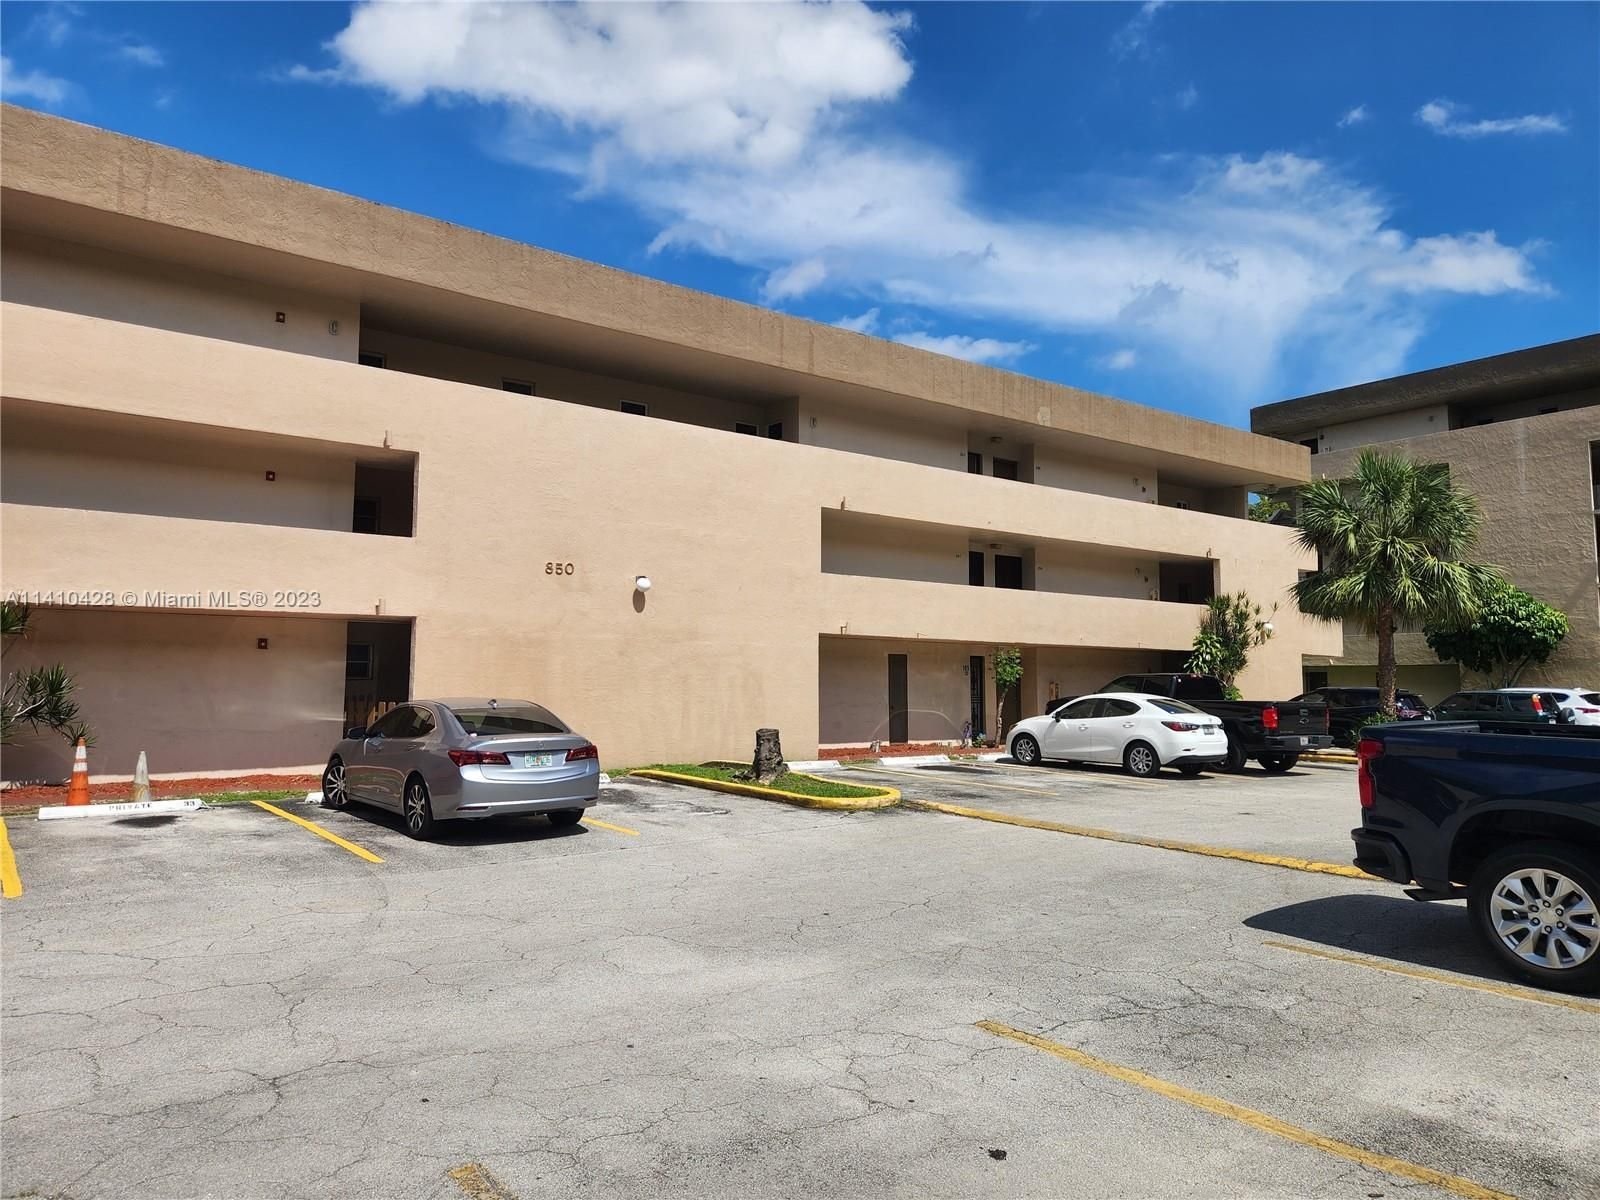 Real estate property located at 850 87th Ave #206, Miami-Dade County, Miami, FL